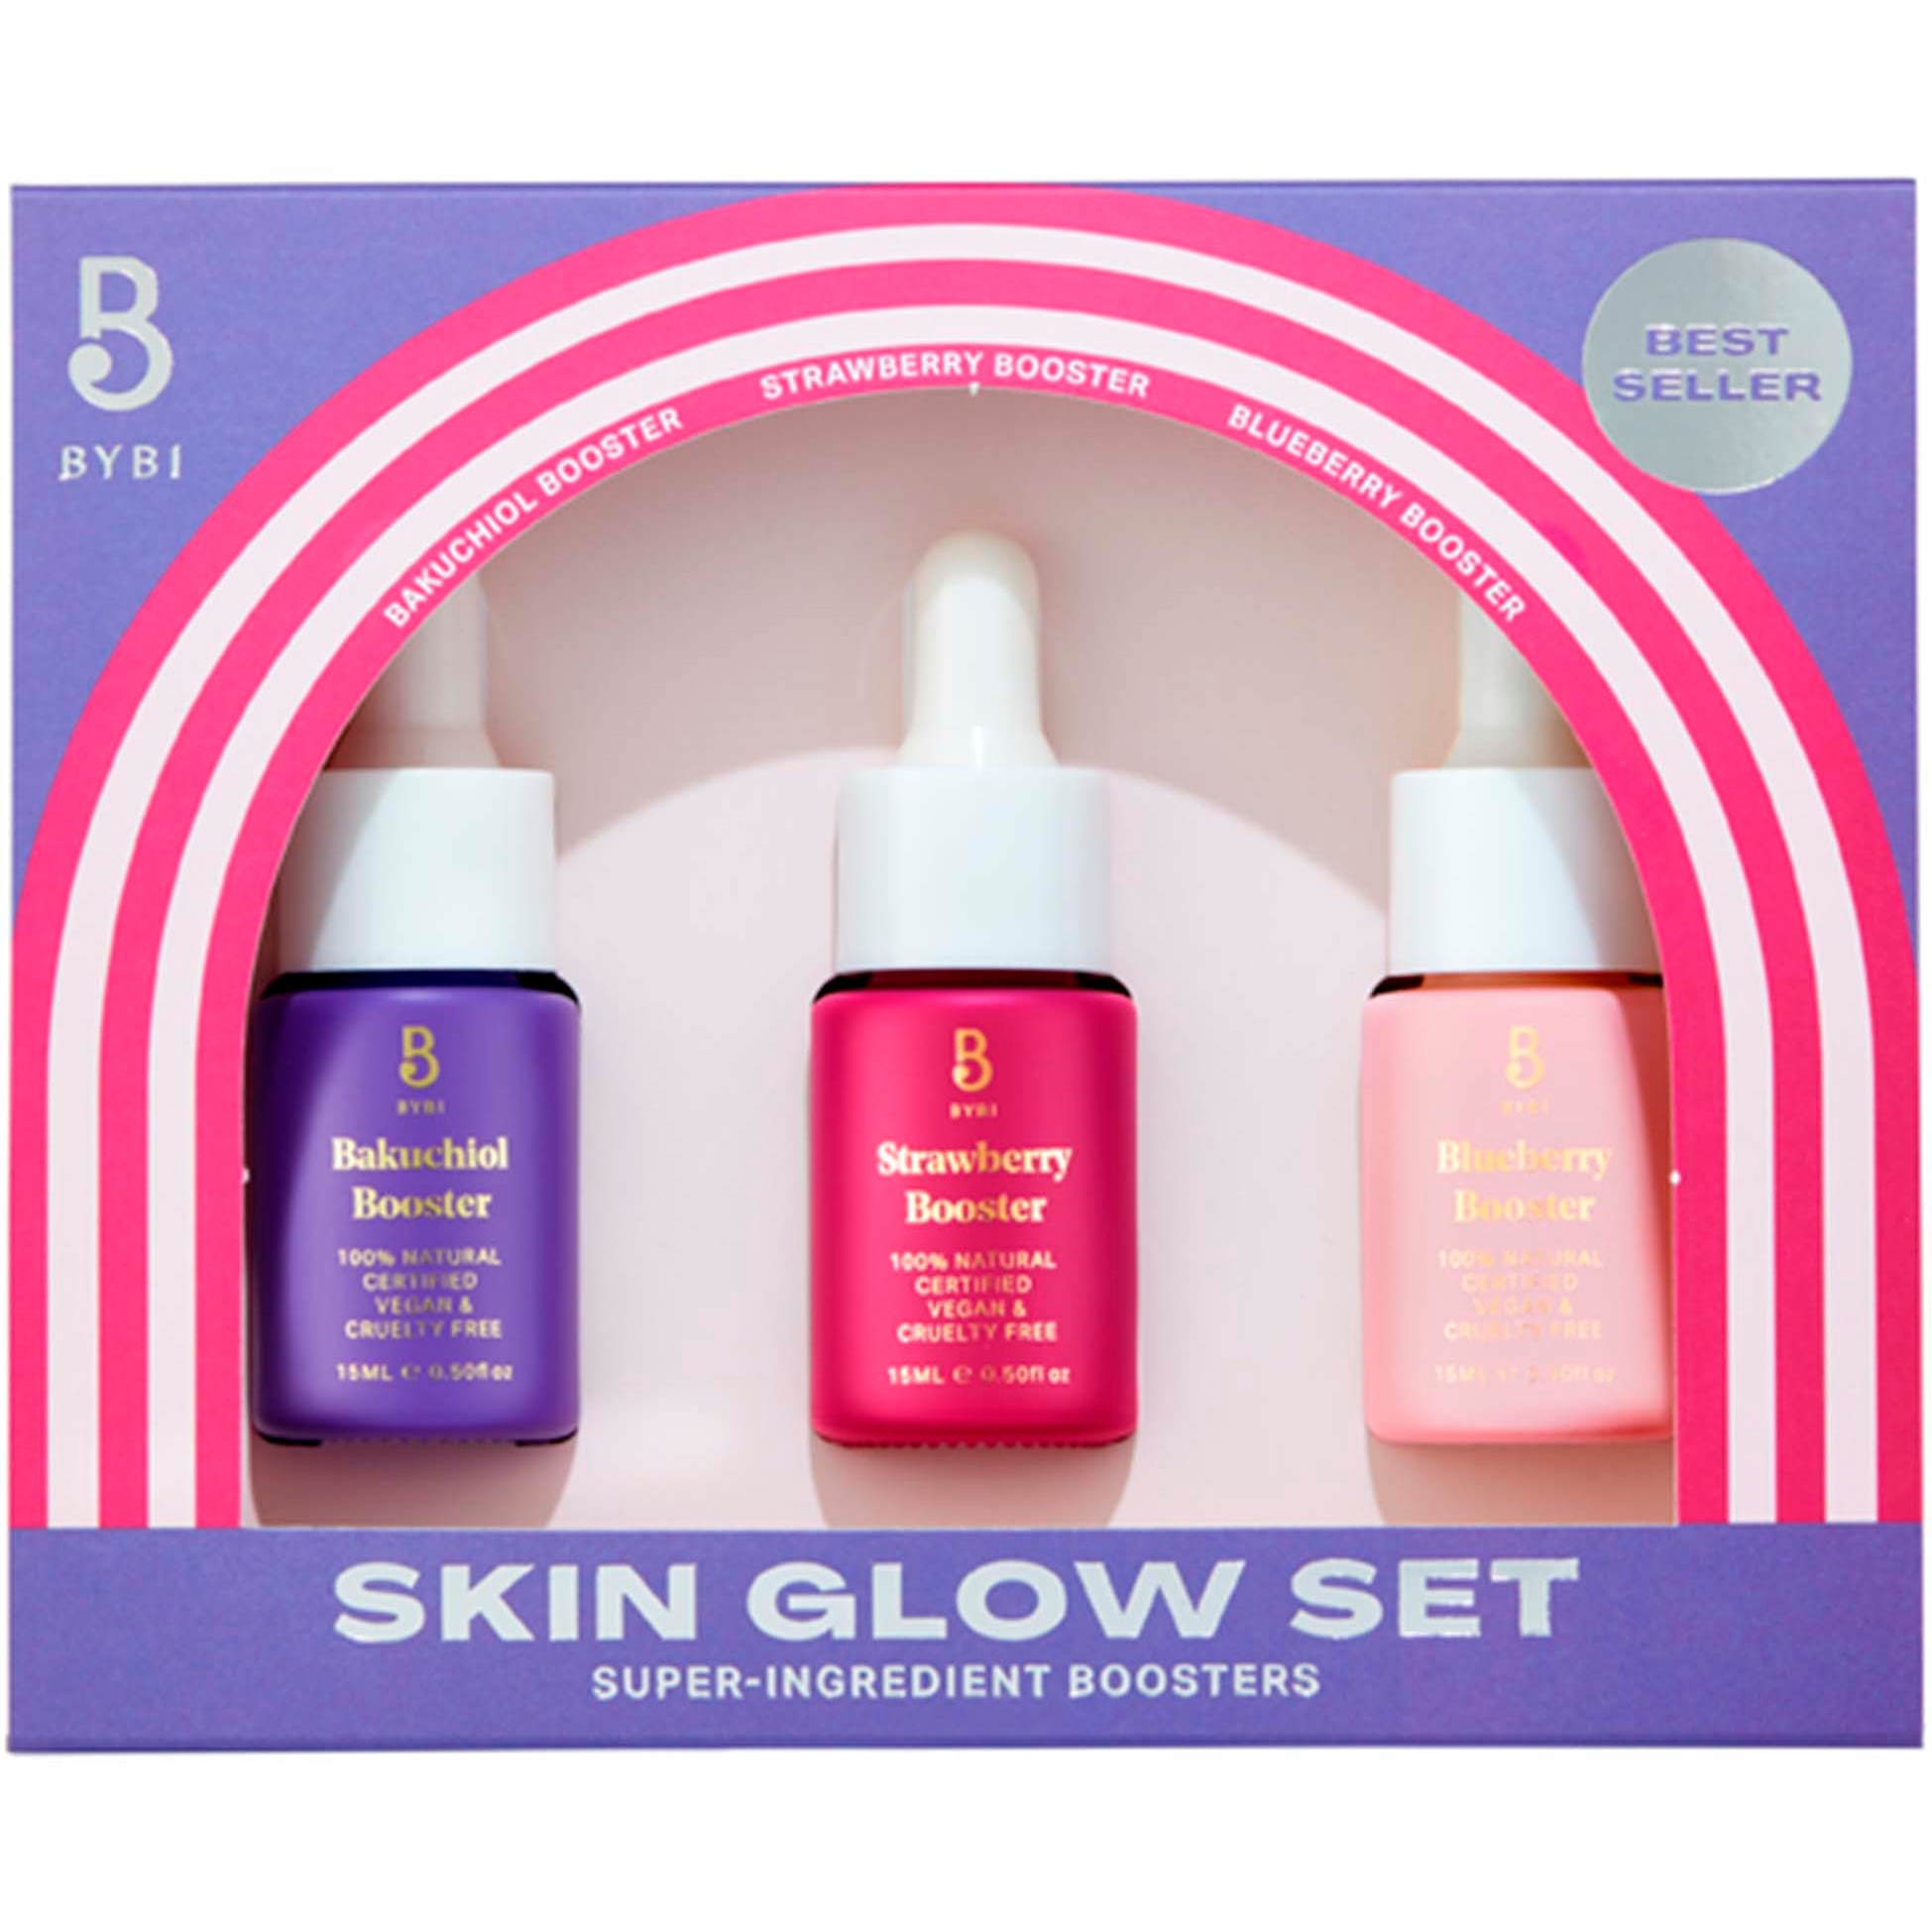 BYBI Beauty Skin Glow Super-Ingredient Boosters Set